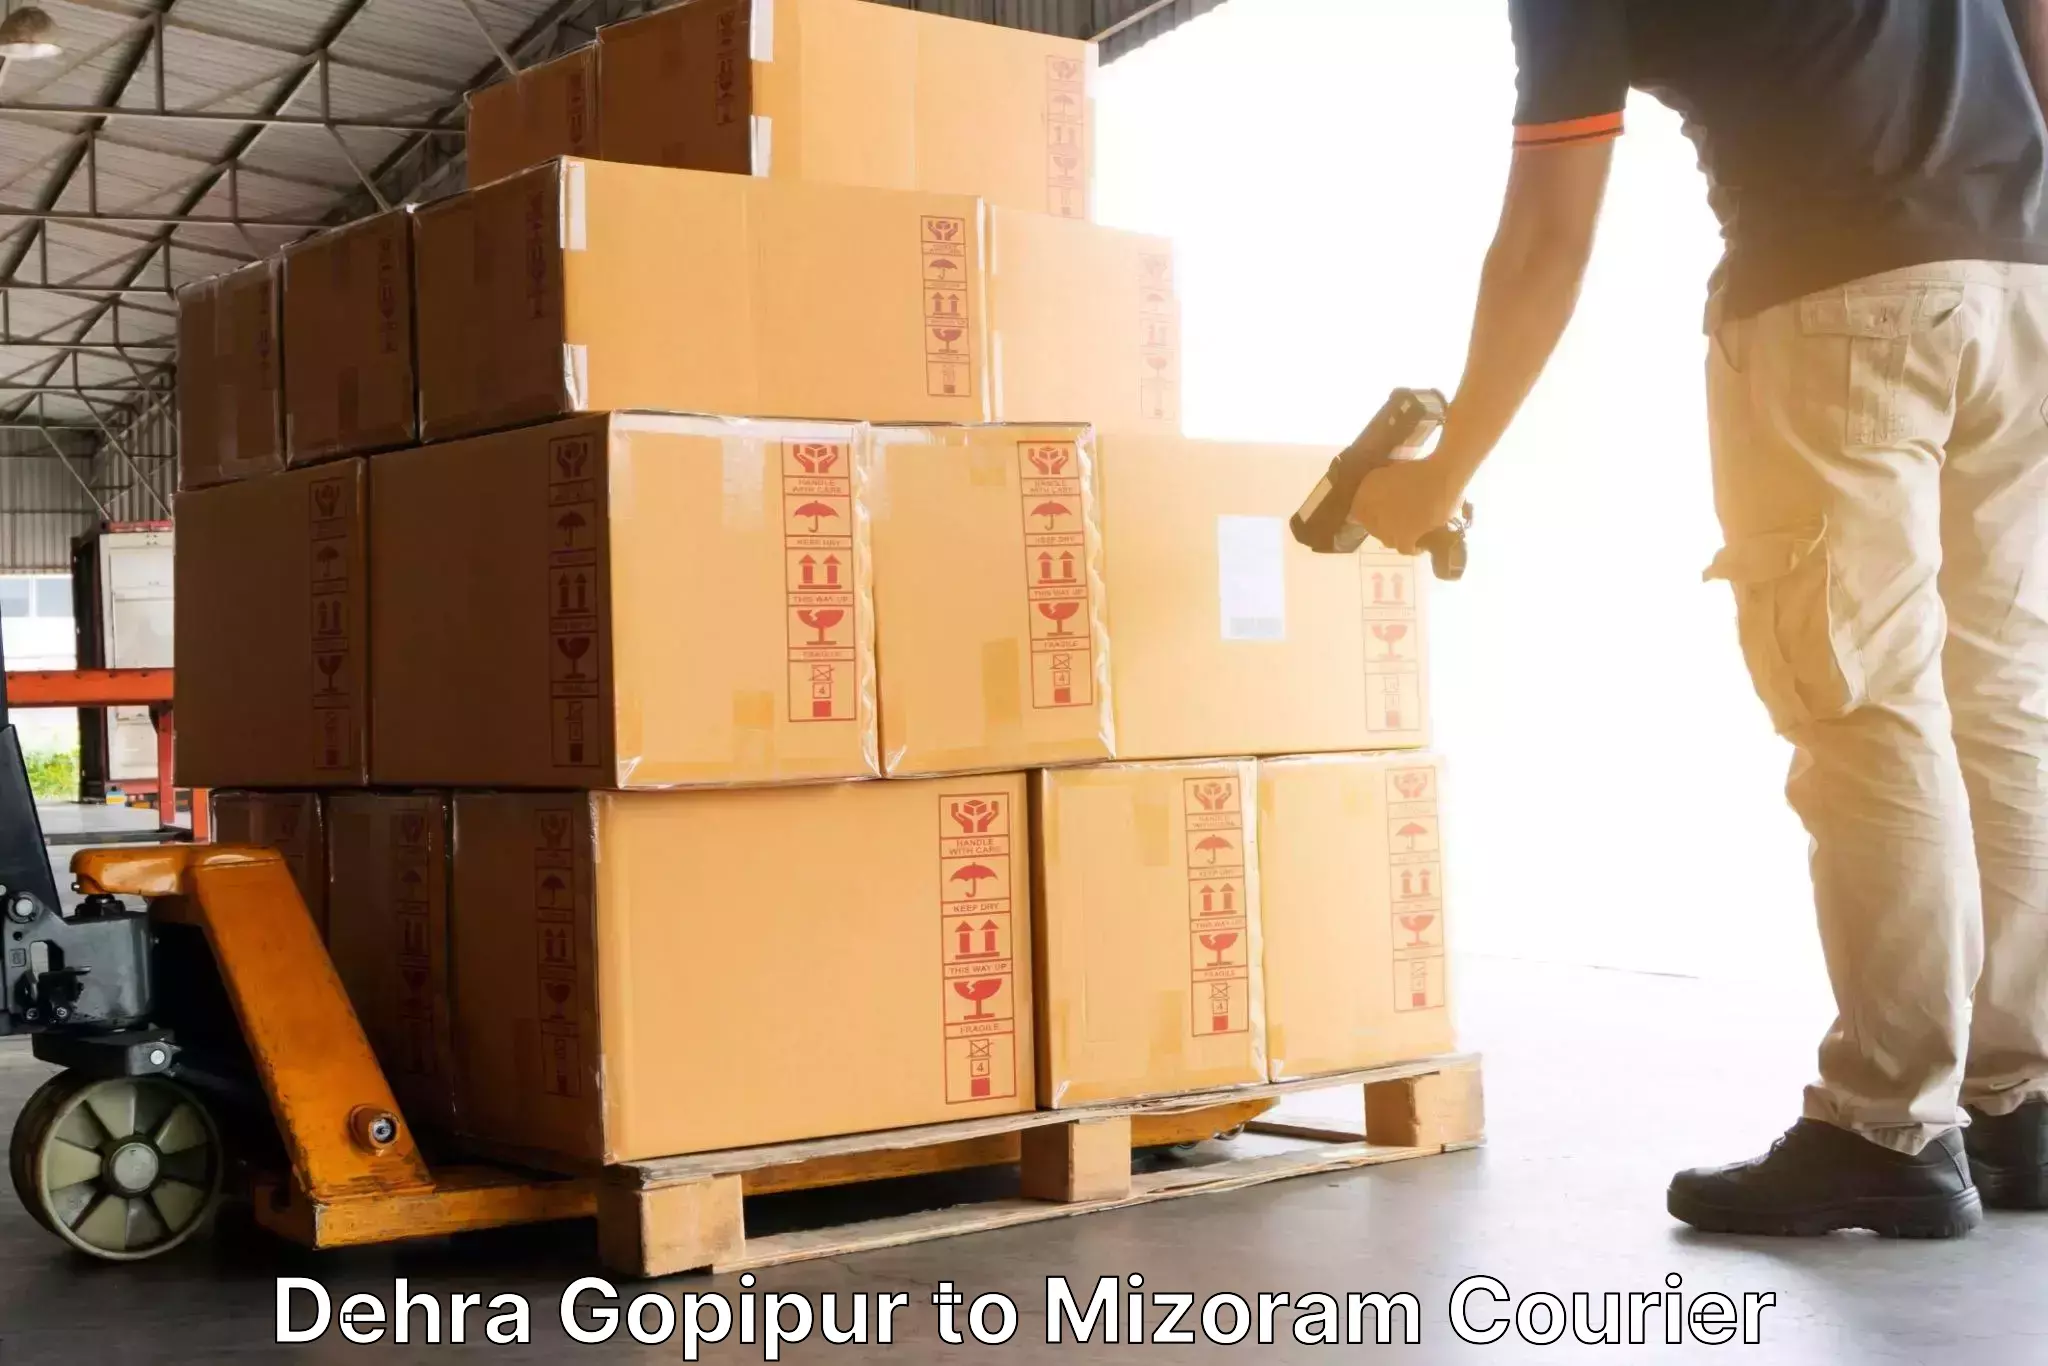 Nationwide parcel services Dehra Gopipur to Aizawl